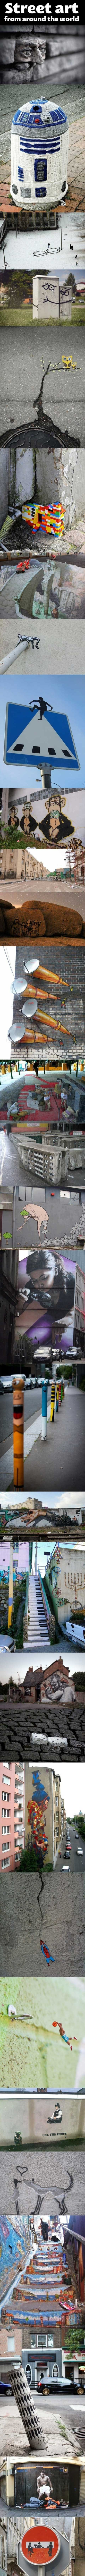 Street art from around the world.